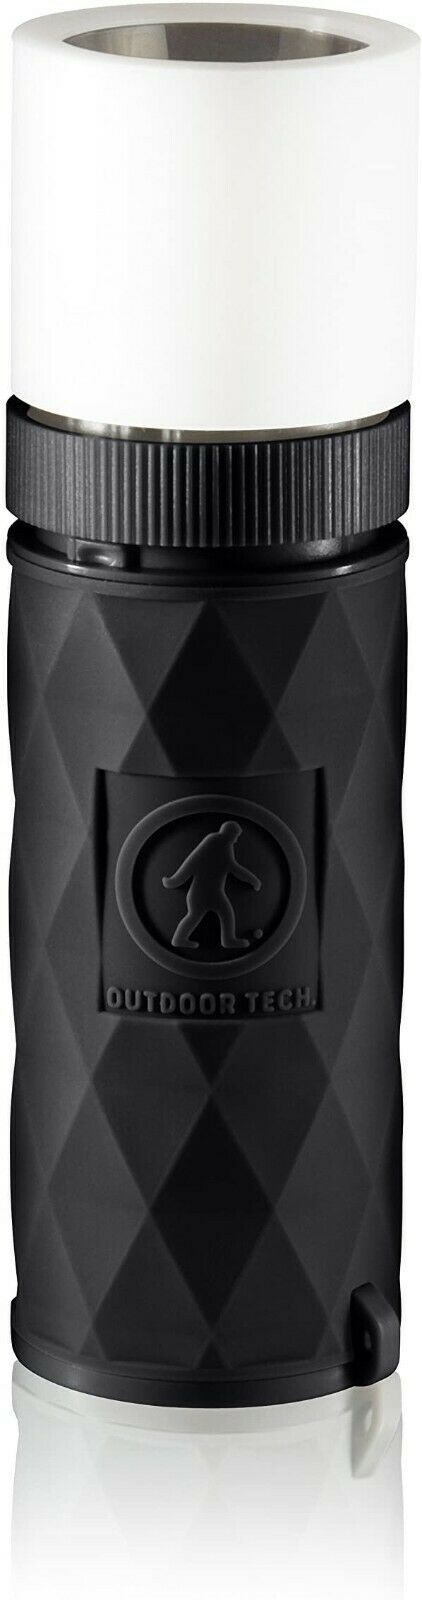 Outdoor Tech Buckshot Pro - Speaker / Flashlight / Powerbank For Bikepacking - Sportandleisure.com (7075174449306)